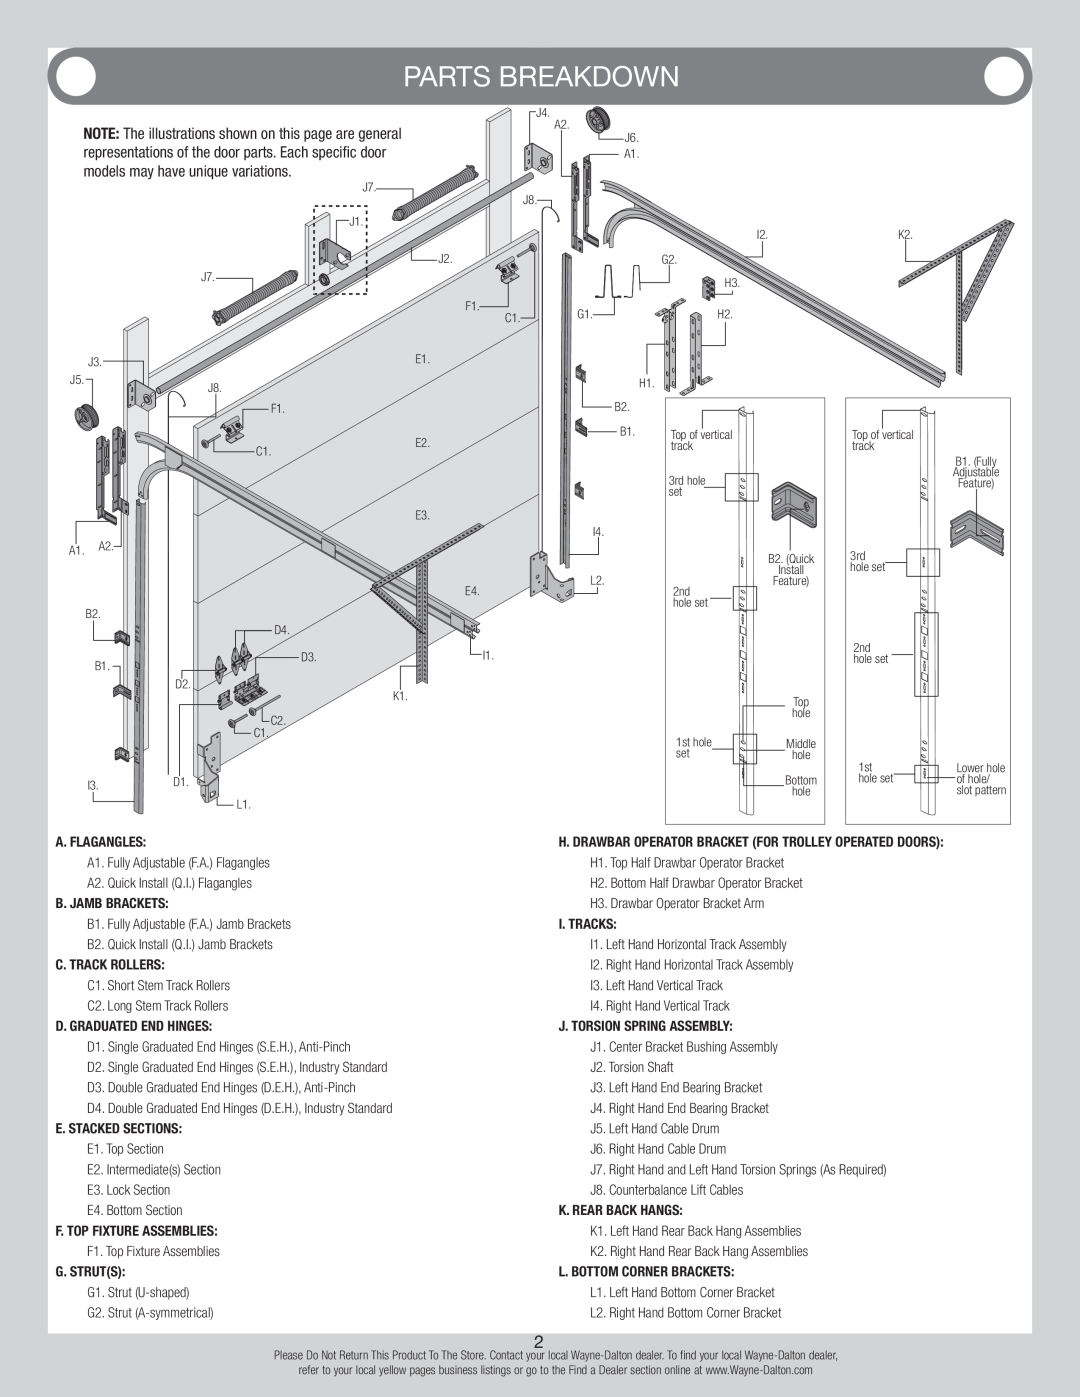 Wayne-Dalton 346919 installation instructions Parts Breakdown 